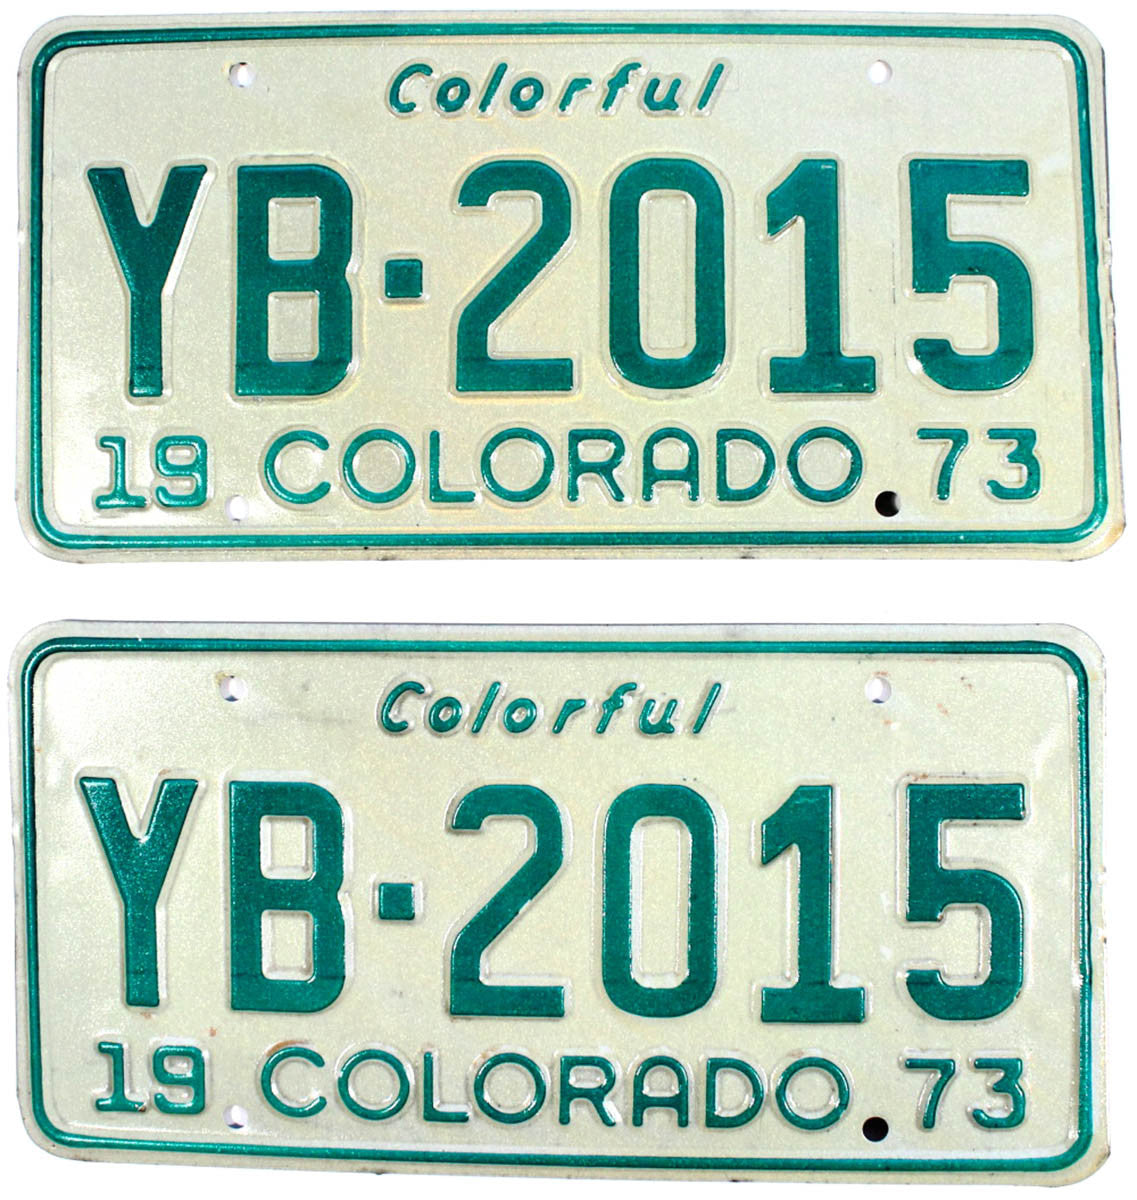 colorado license plate